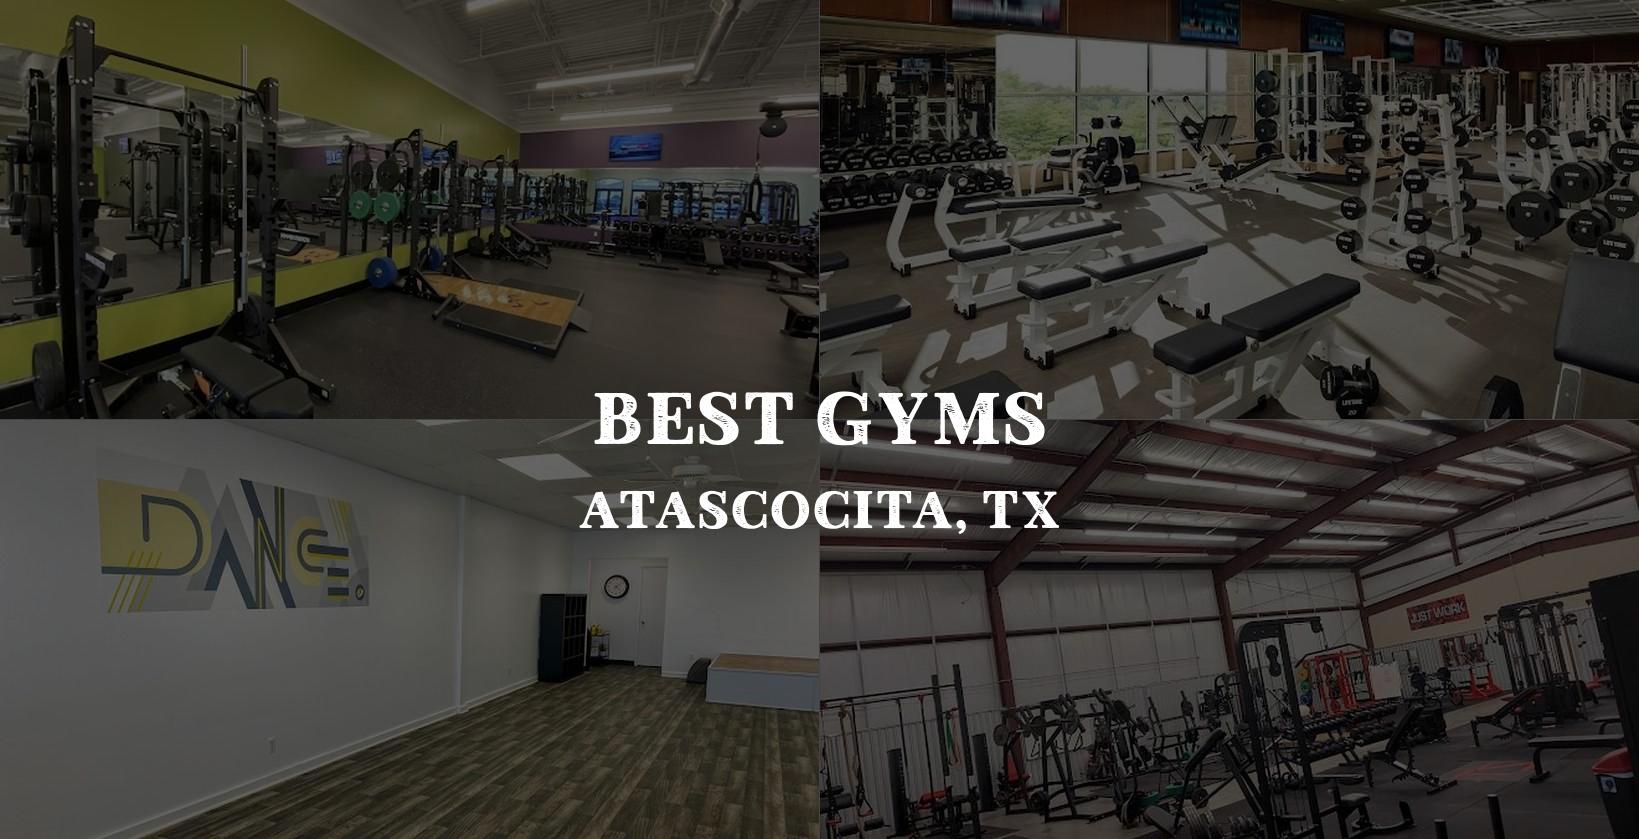 Best Gyms in Atascocita, TX